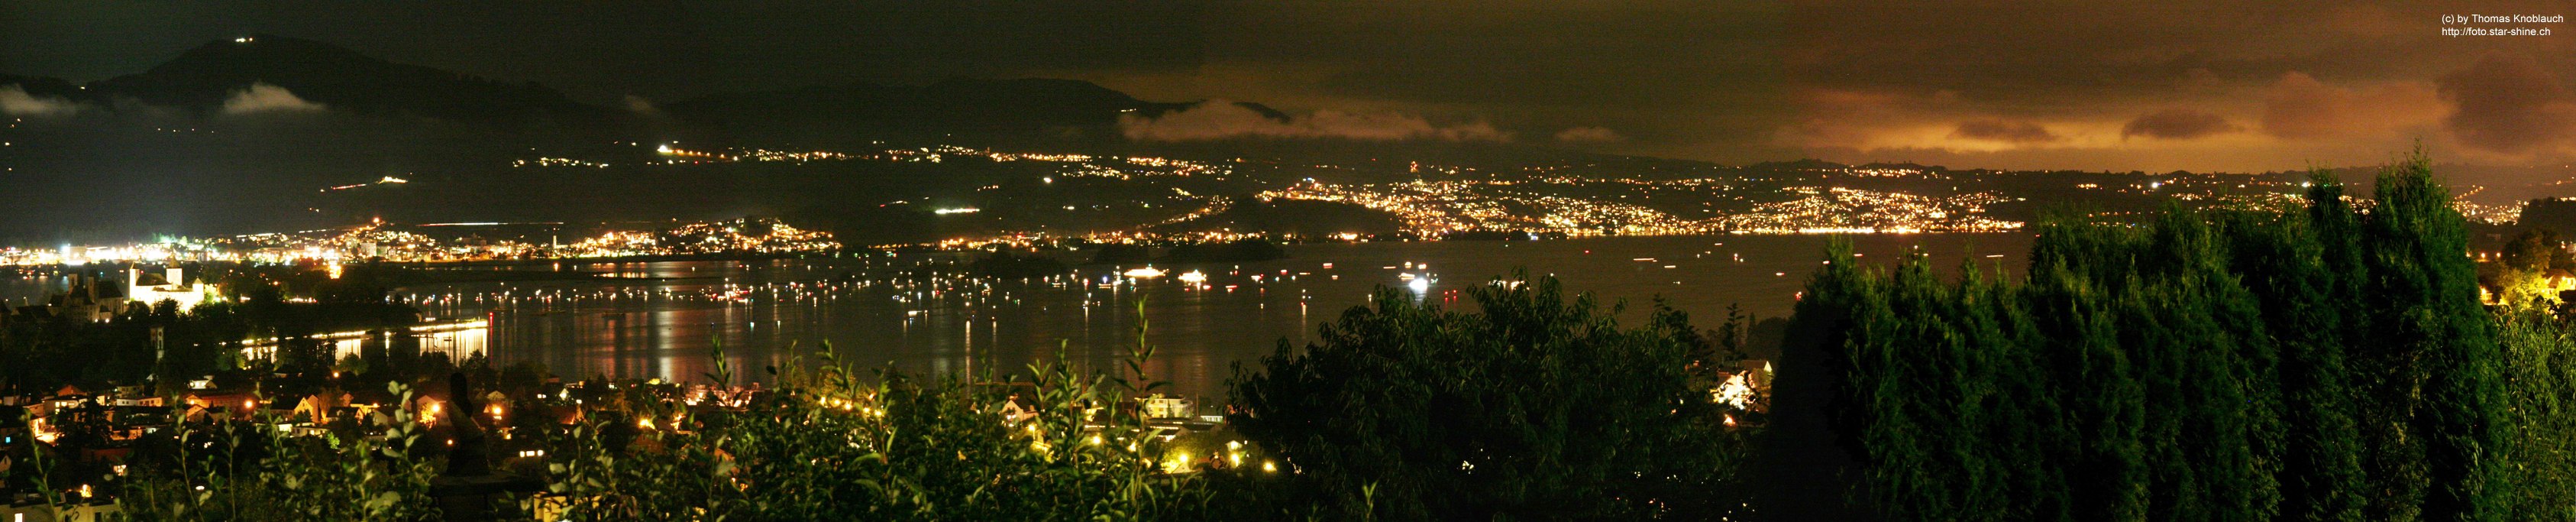 2006-08-12 - Zürichsee-Panorama bei Rapperswil bei Nacht